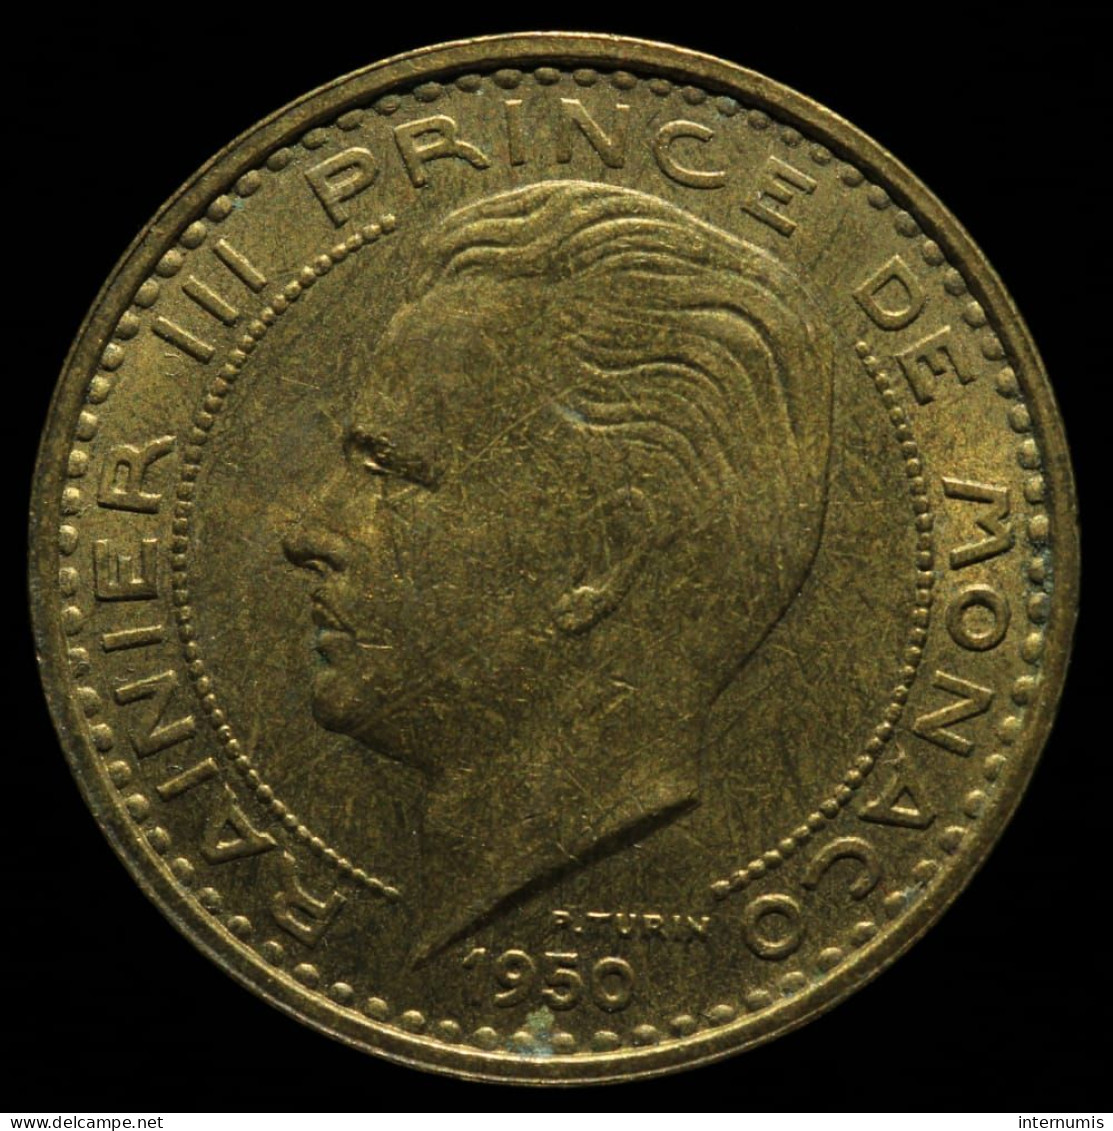 Monaco, Rainier III, 50 Francs, 1950, Cu-Al, NC (UNC), KM#132, G.MC141 - 1949-1956 Francos Antiguos